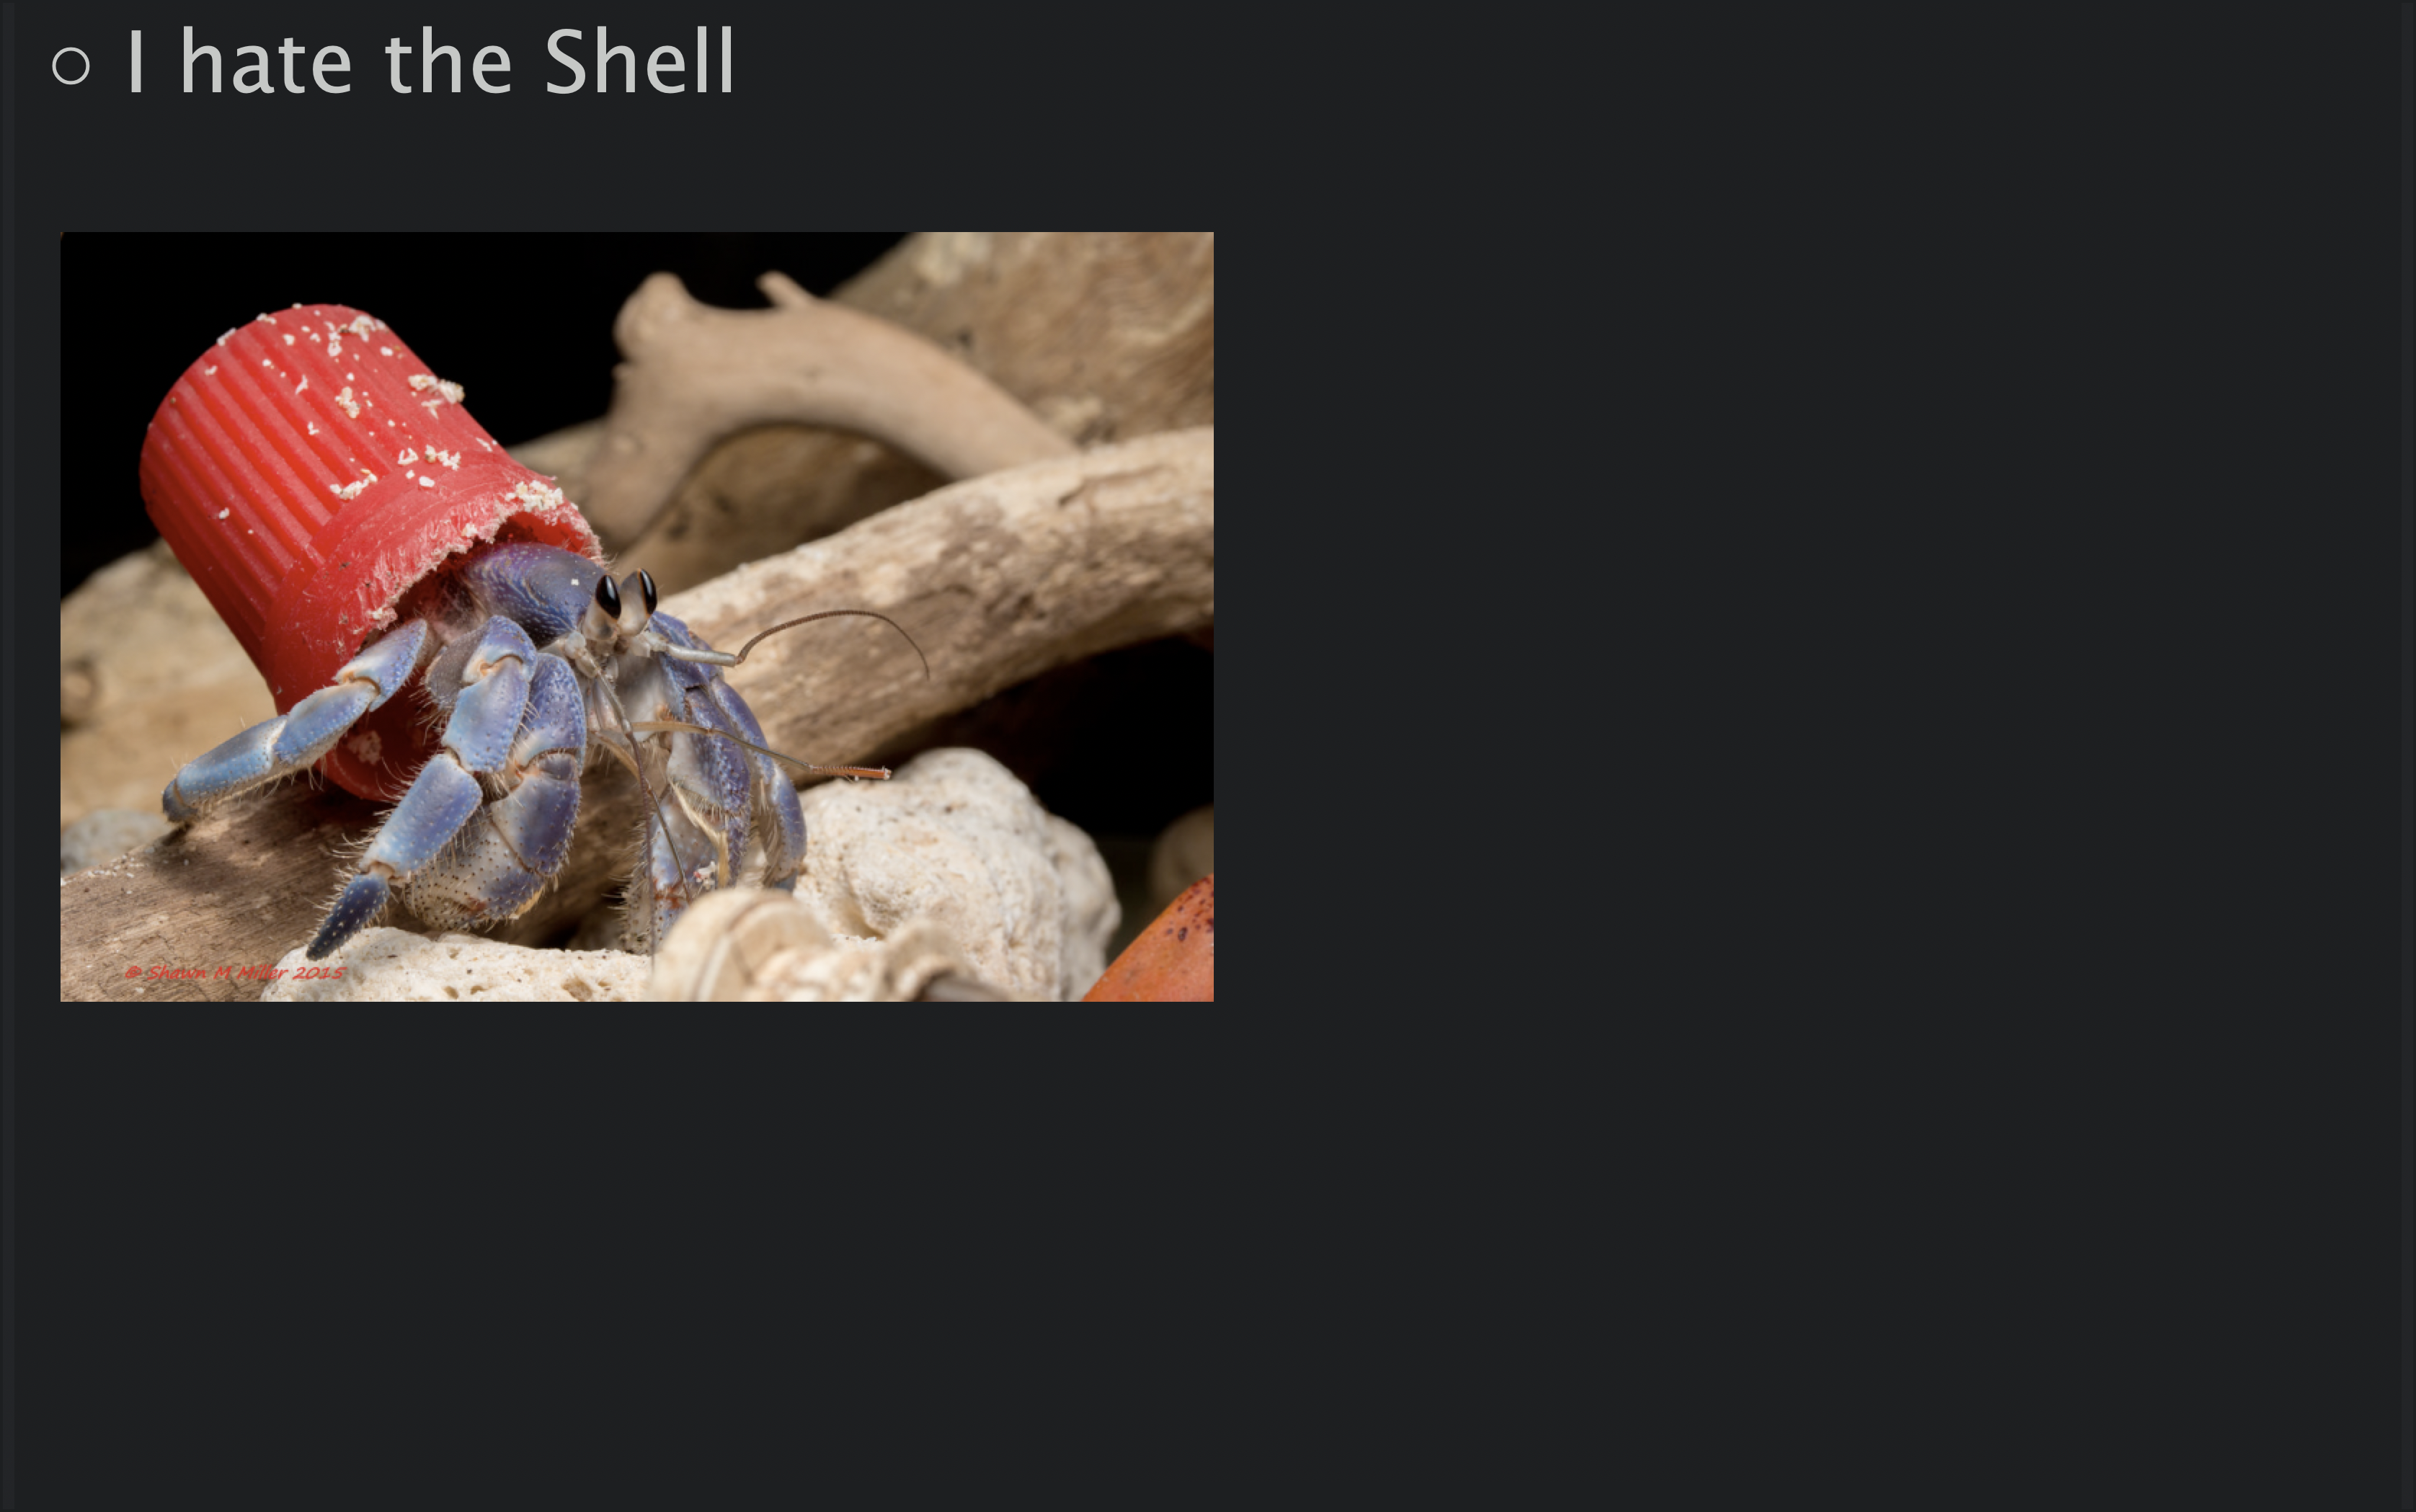 I hate the shell